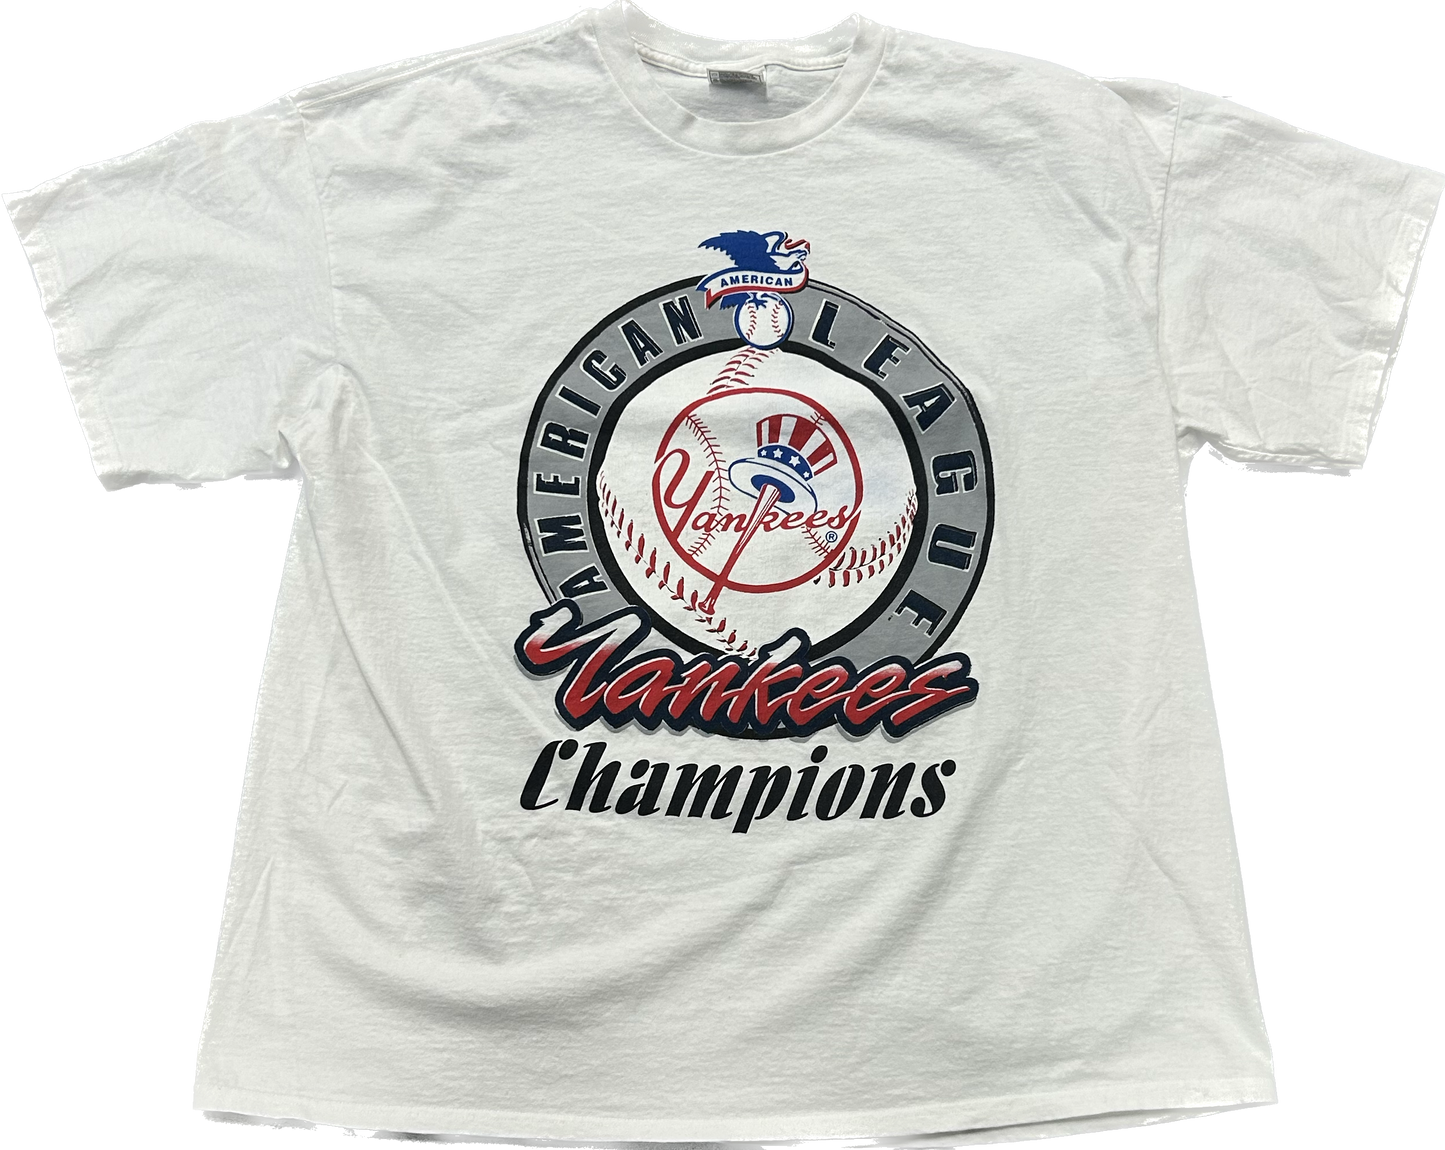 Yankees Champions Tee